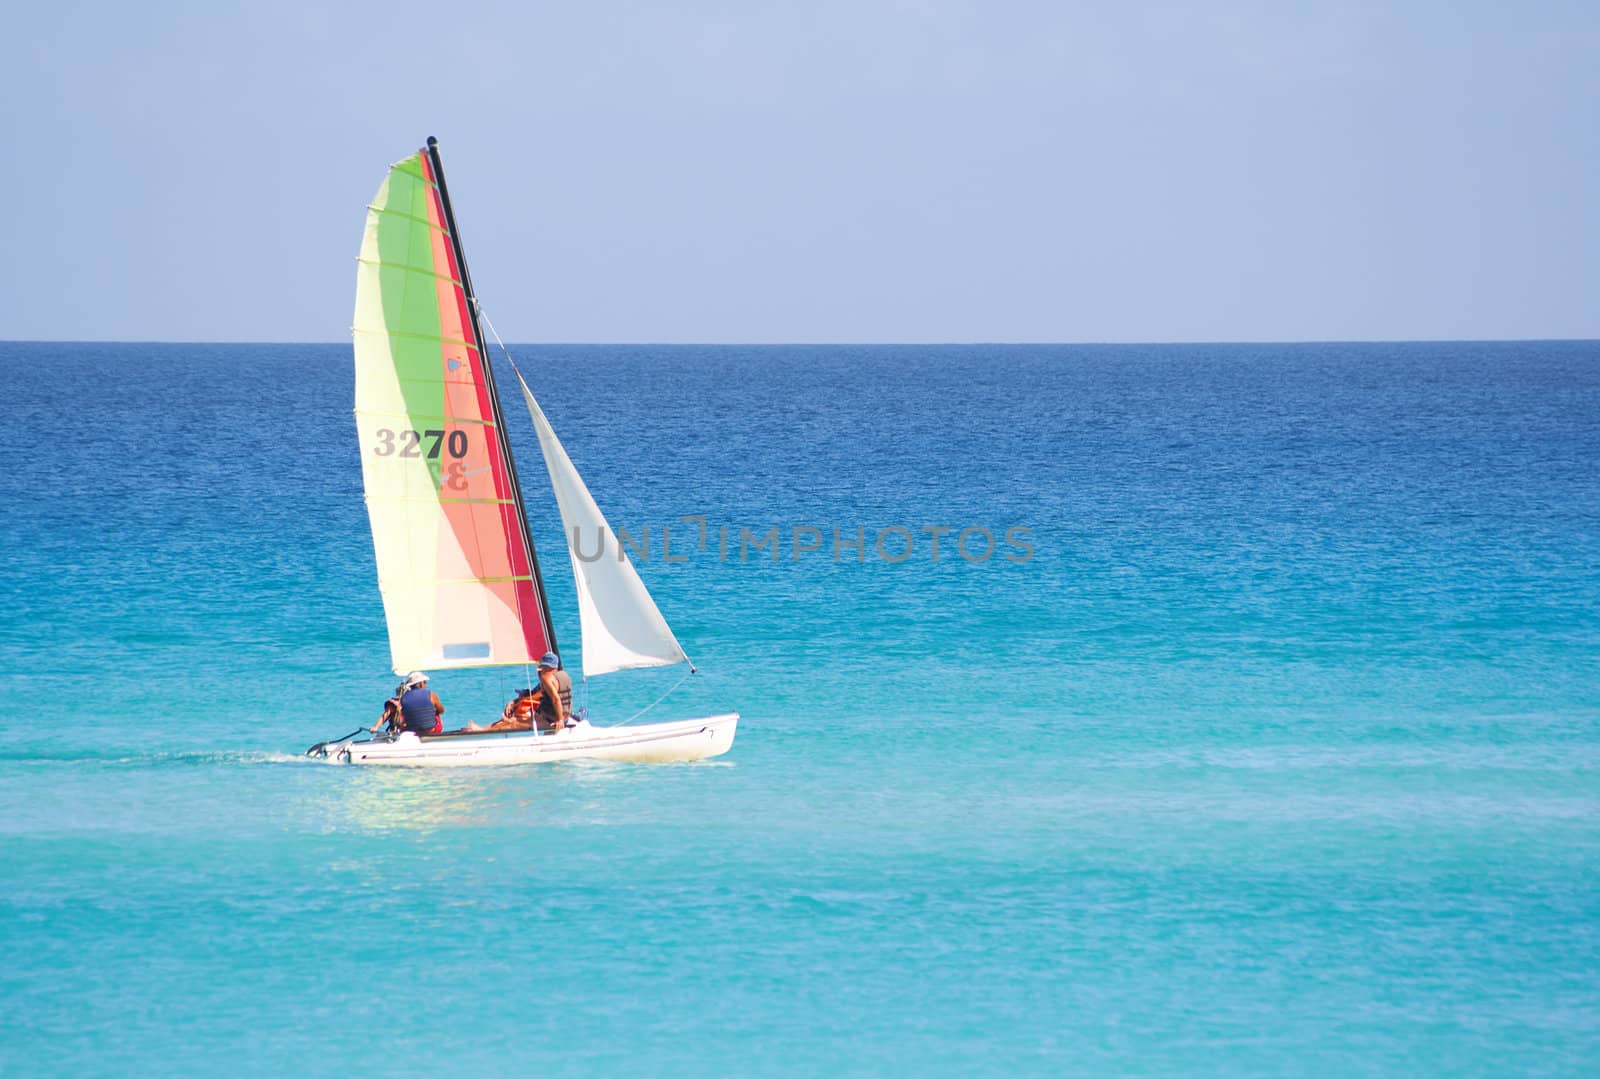 Small reacreational sailboat in a calm blue sea